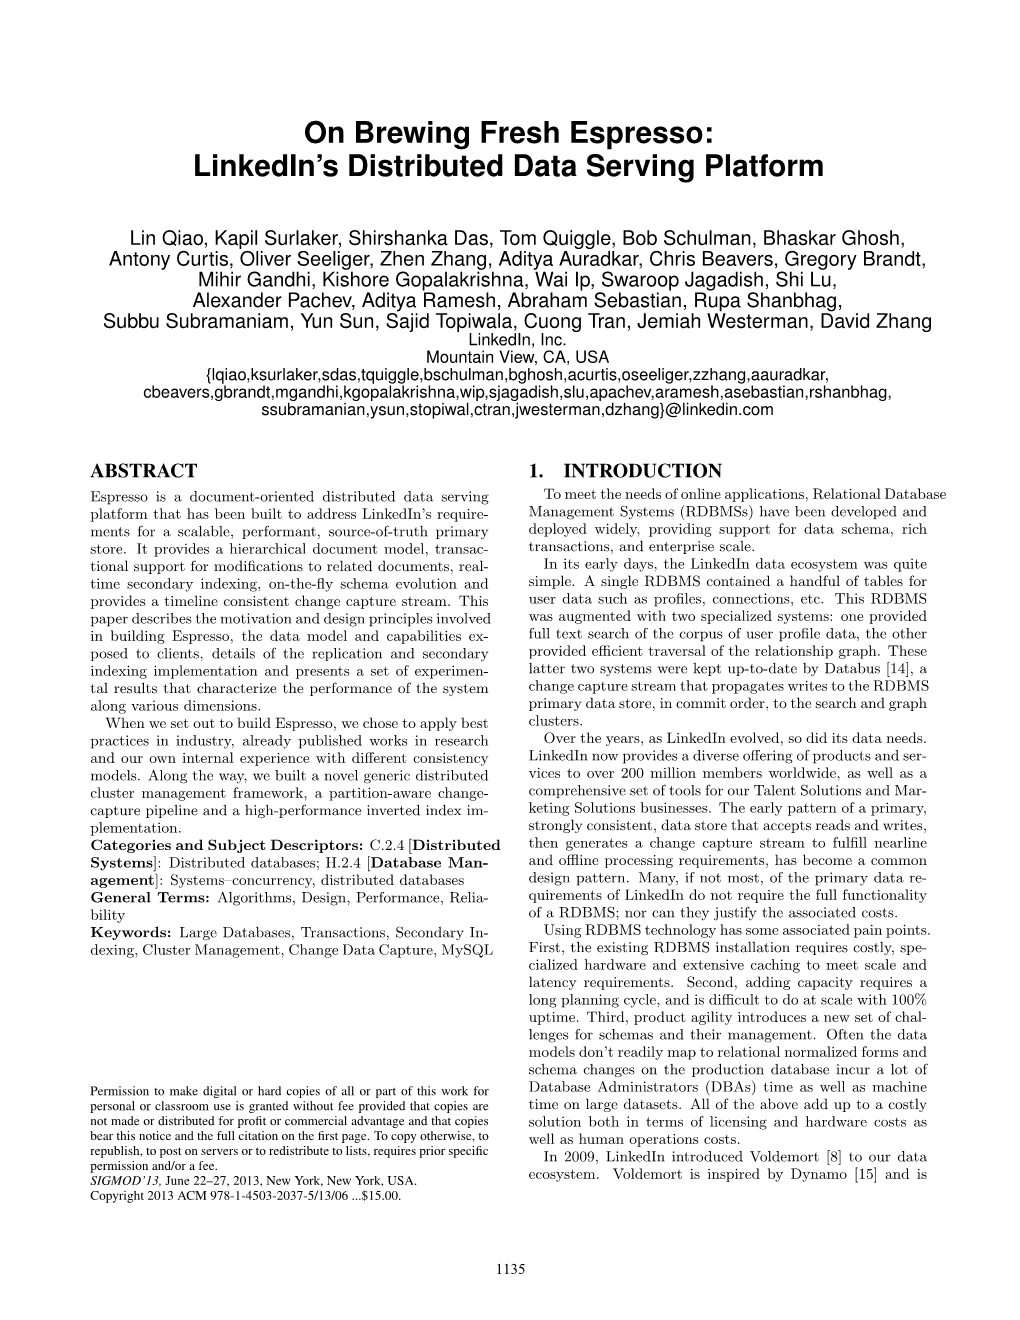 On Brewing Fresh Espresso: Linkedin's Distributed Data Serving Platform